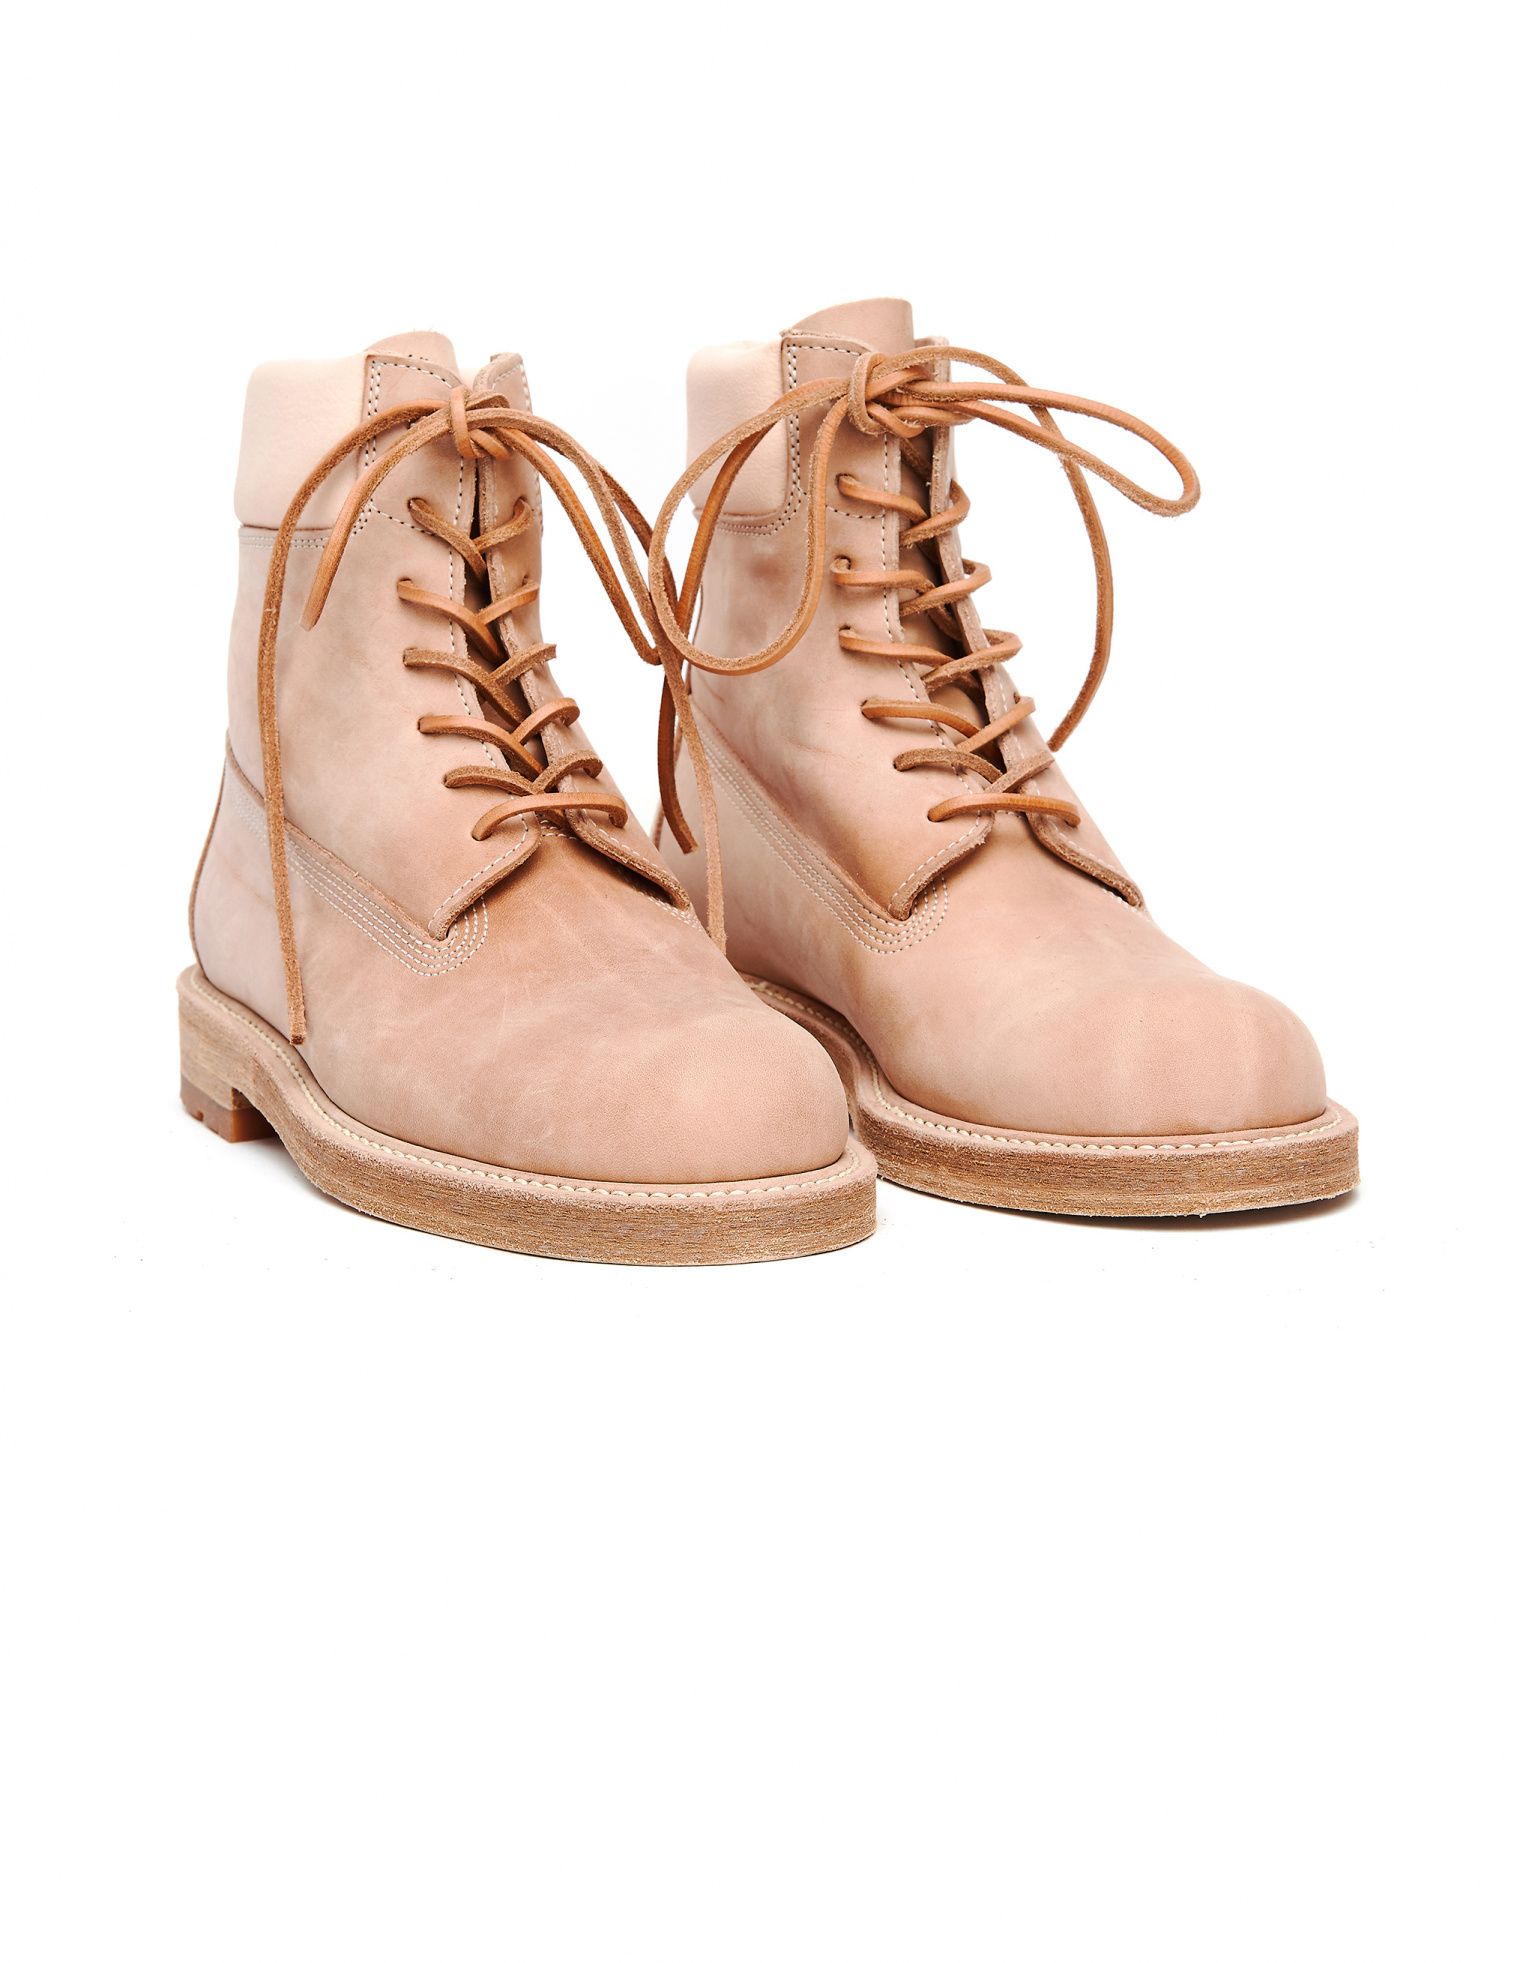 Buy Hender Scheme men beige leather mip-14 boots for $563 online 